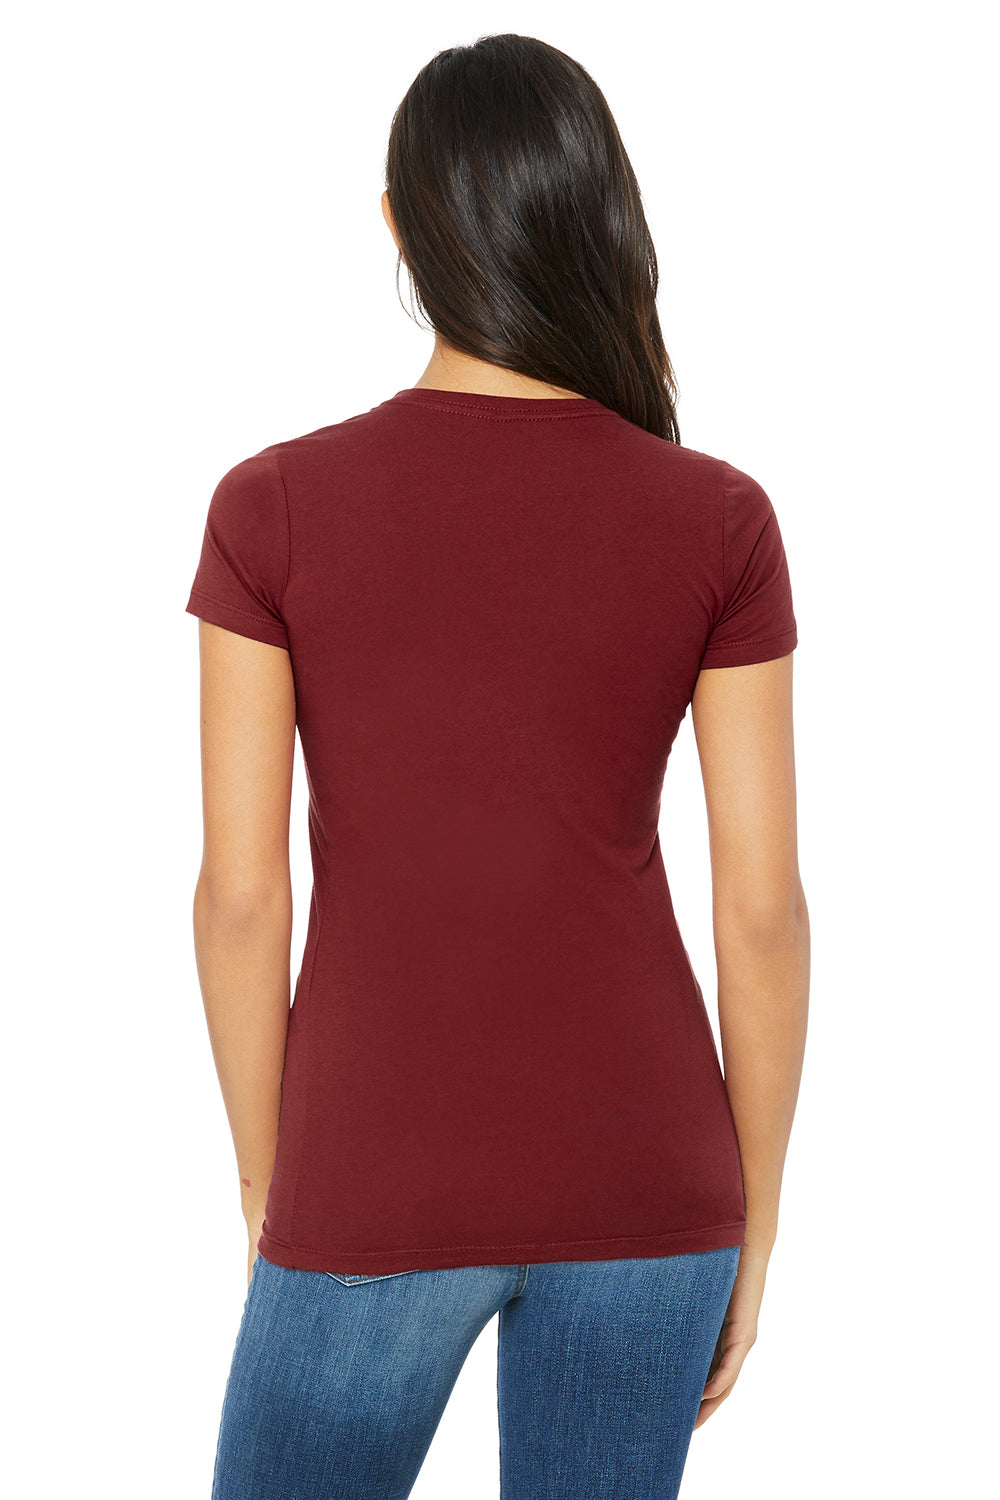 Bella + Canvas BC6004/6004 Womens The Favorite Short Sleeve Crewneck T-Shirt Cardinal Red Model Back